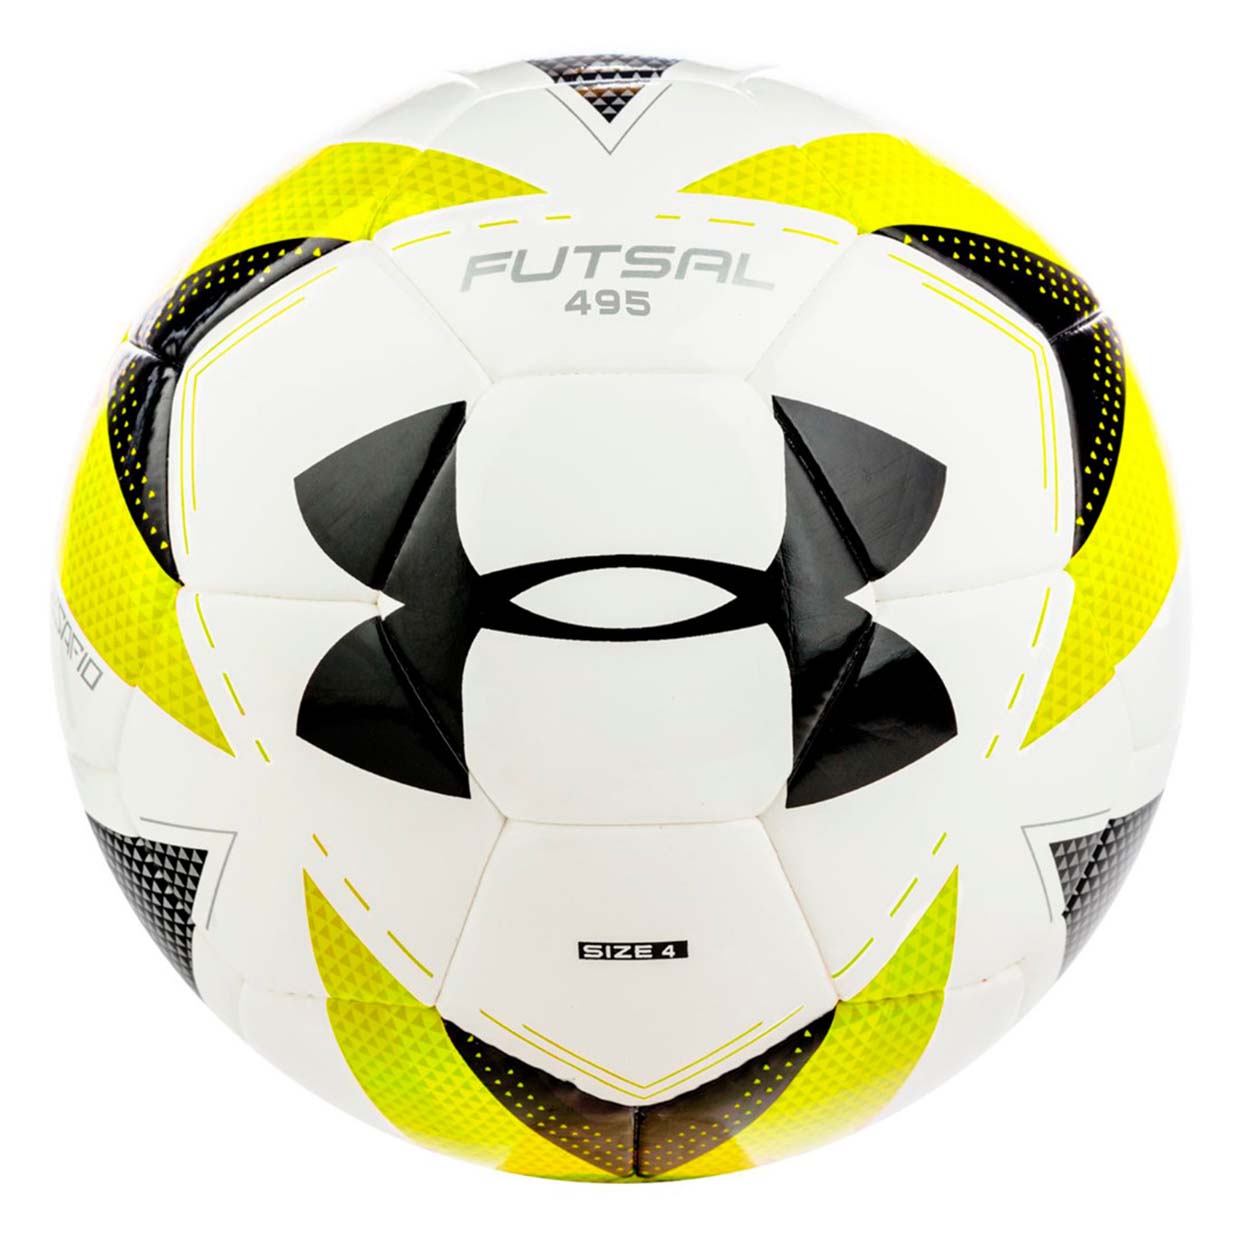 Мяч Under Armour 495 Futsal 1311164-101